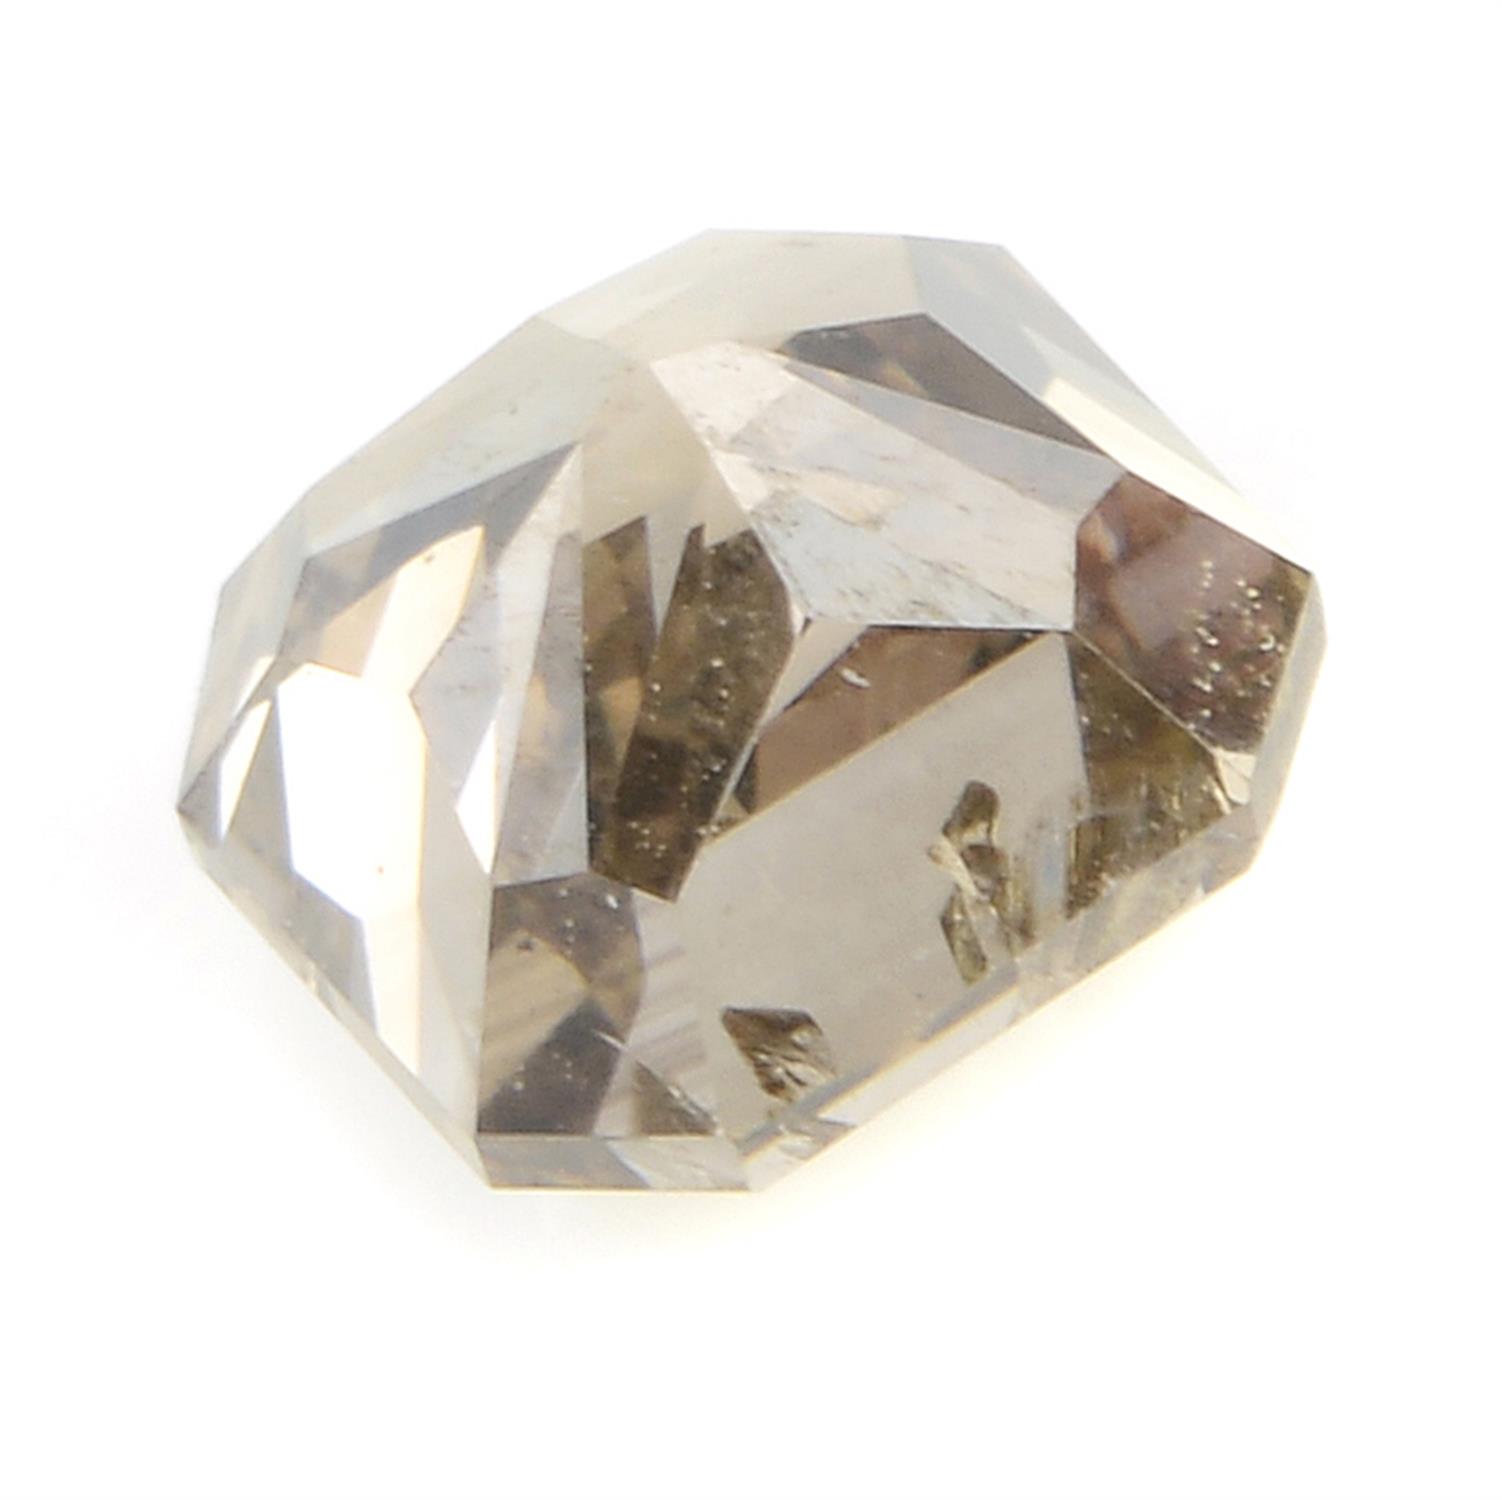 Rectangular-shape diamond, 0.57ct - Image 2 of 2